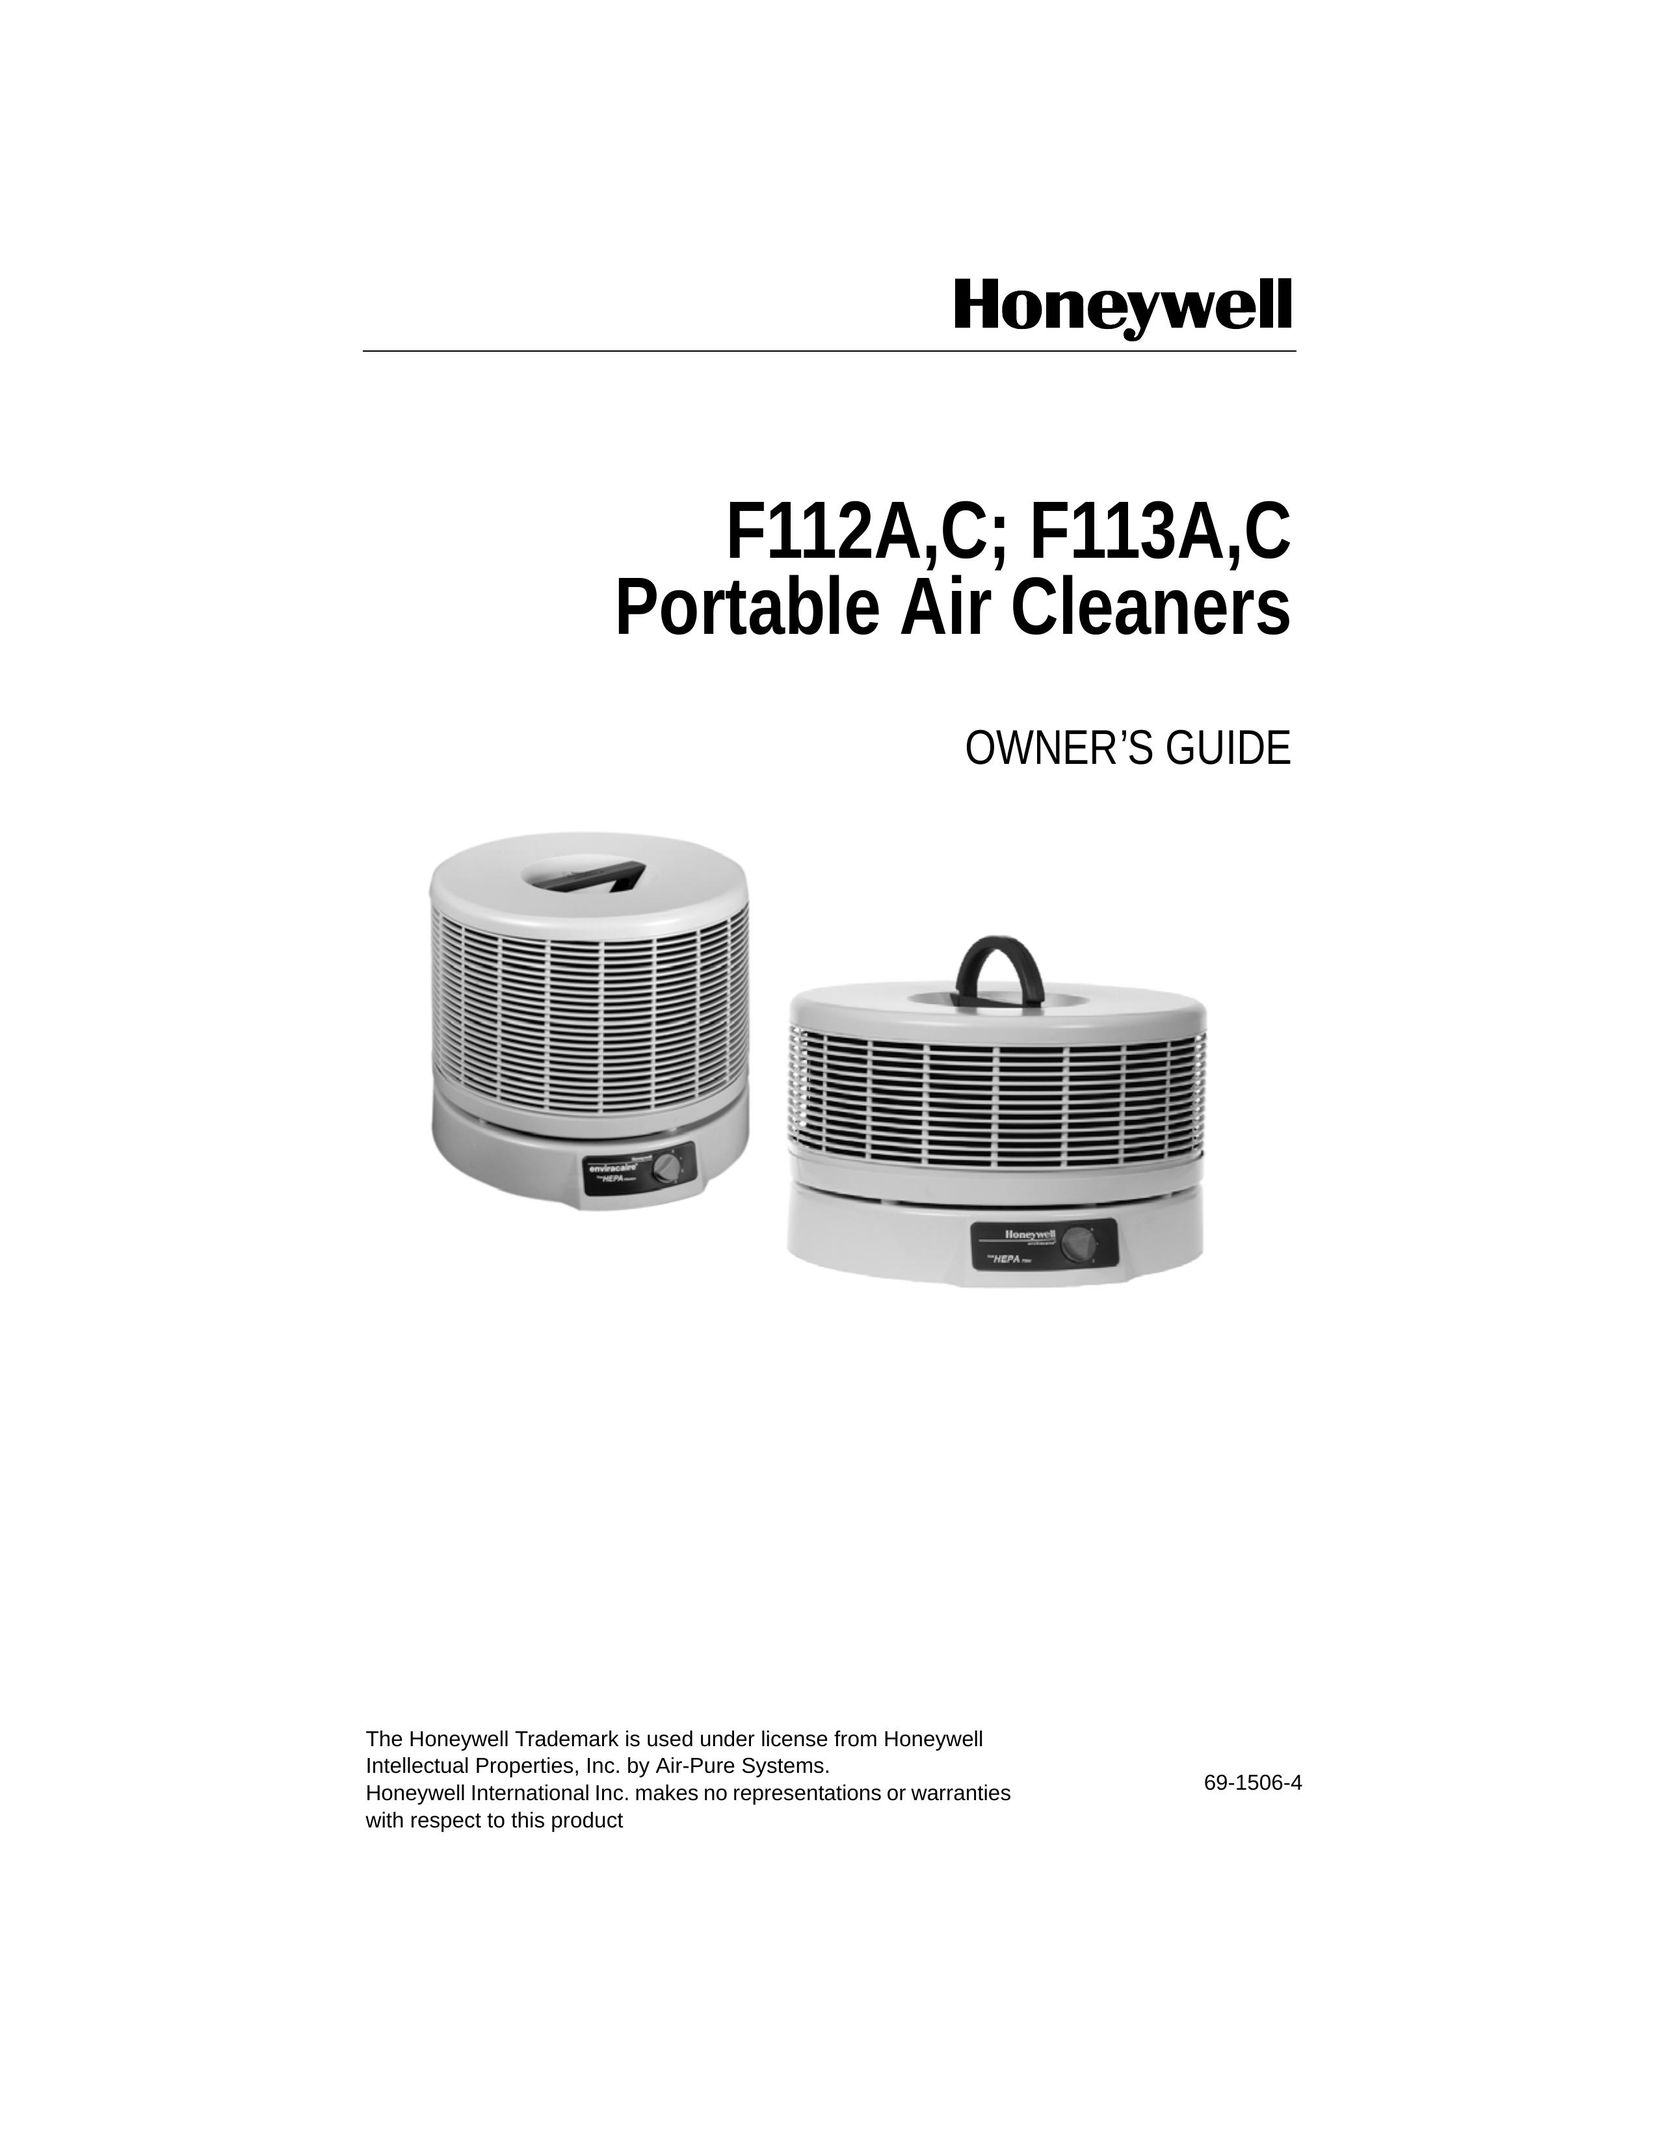 Honeywell F113A Air Cleaner User Manual